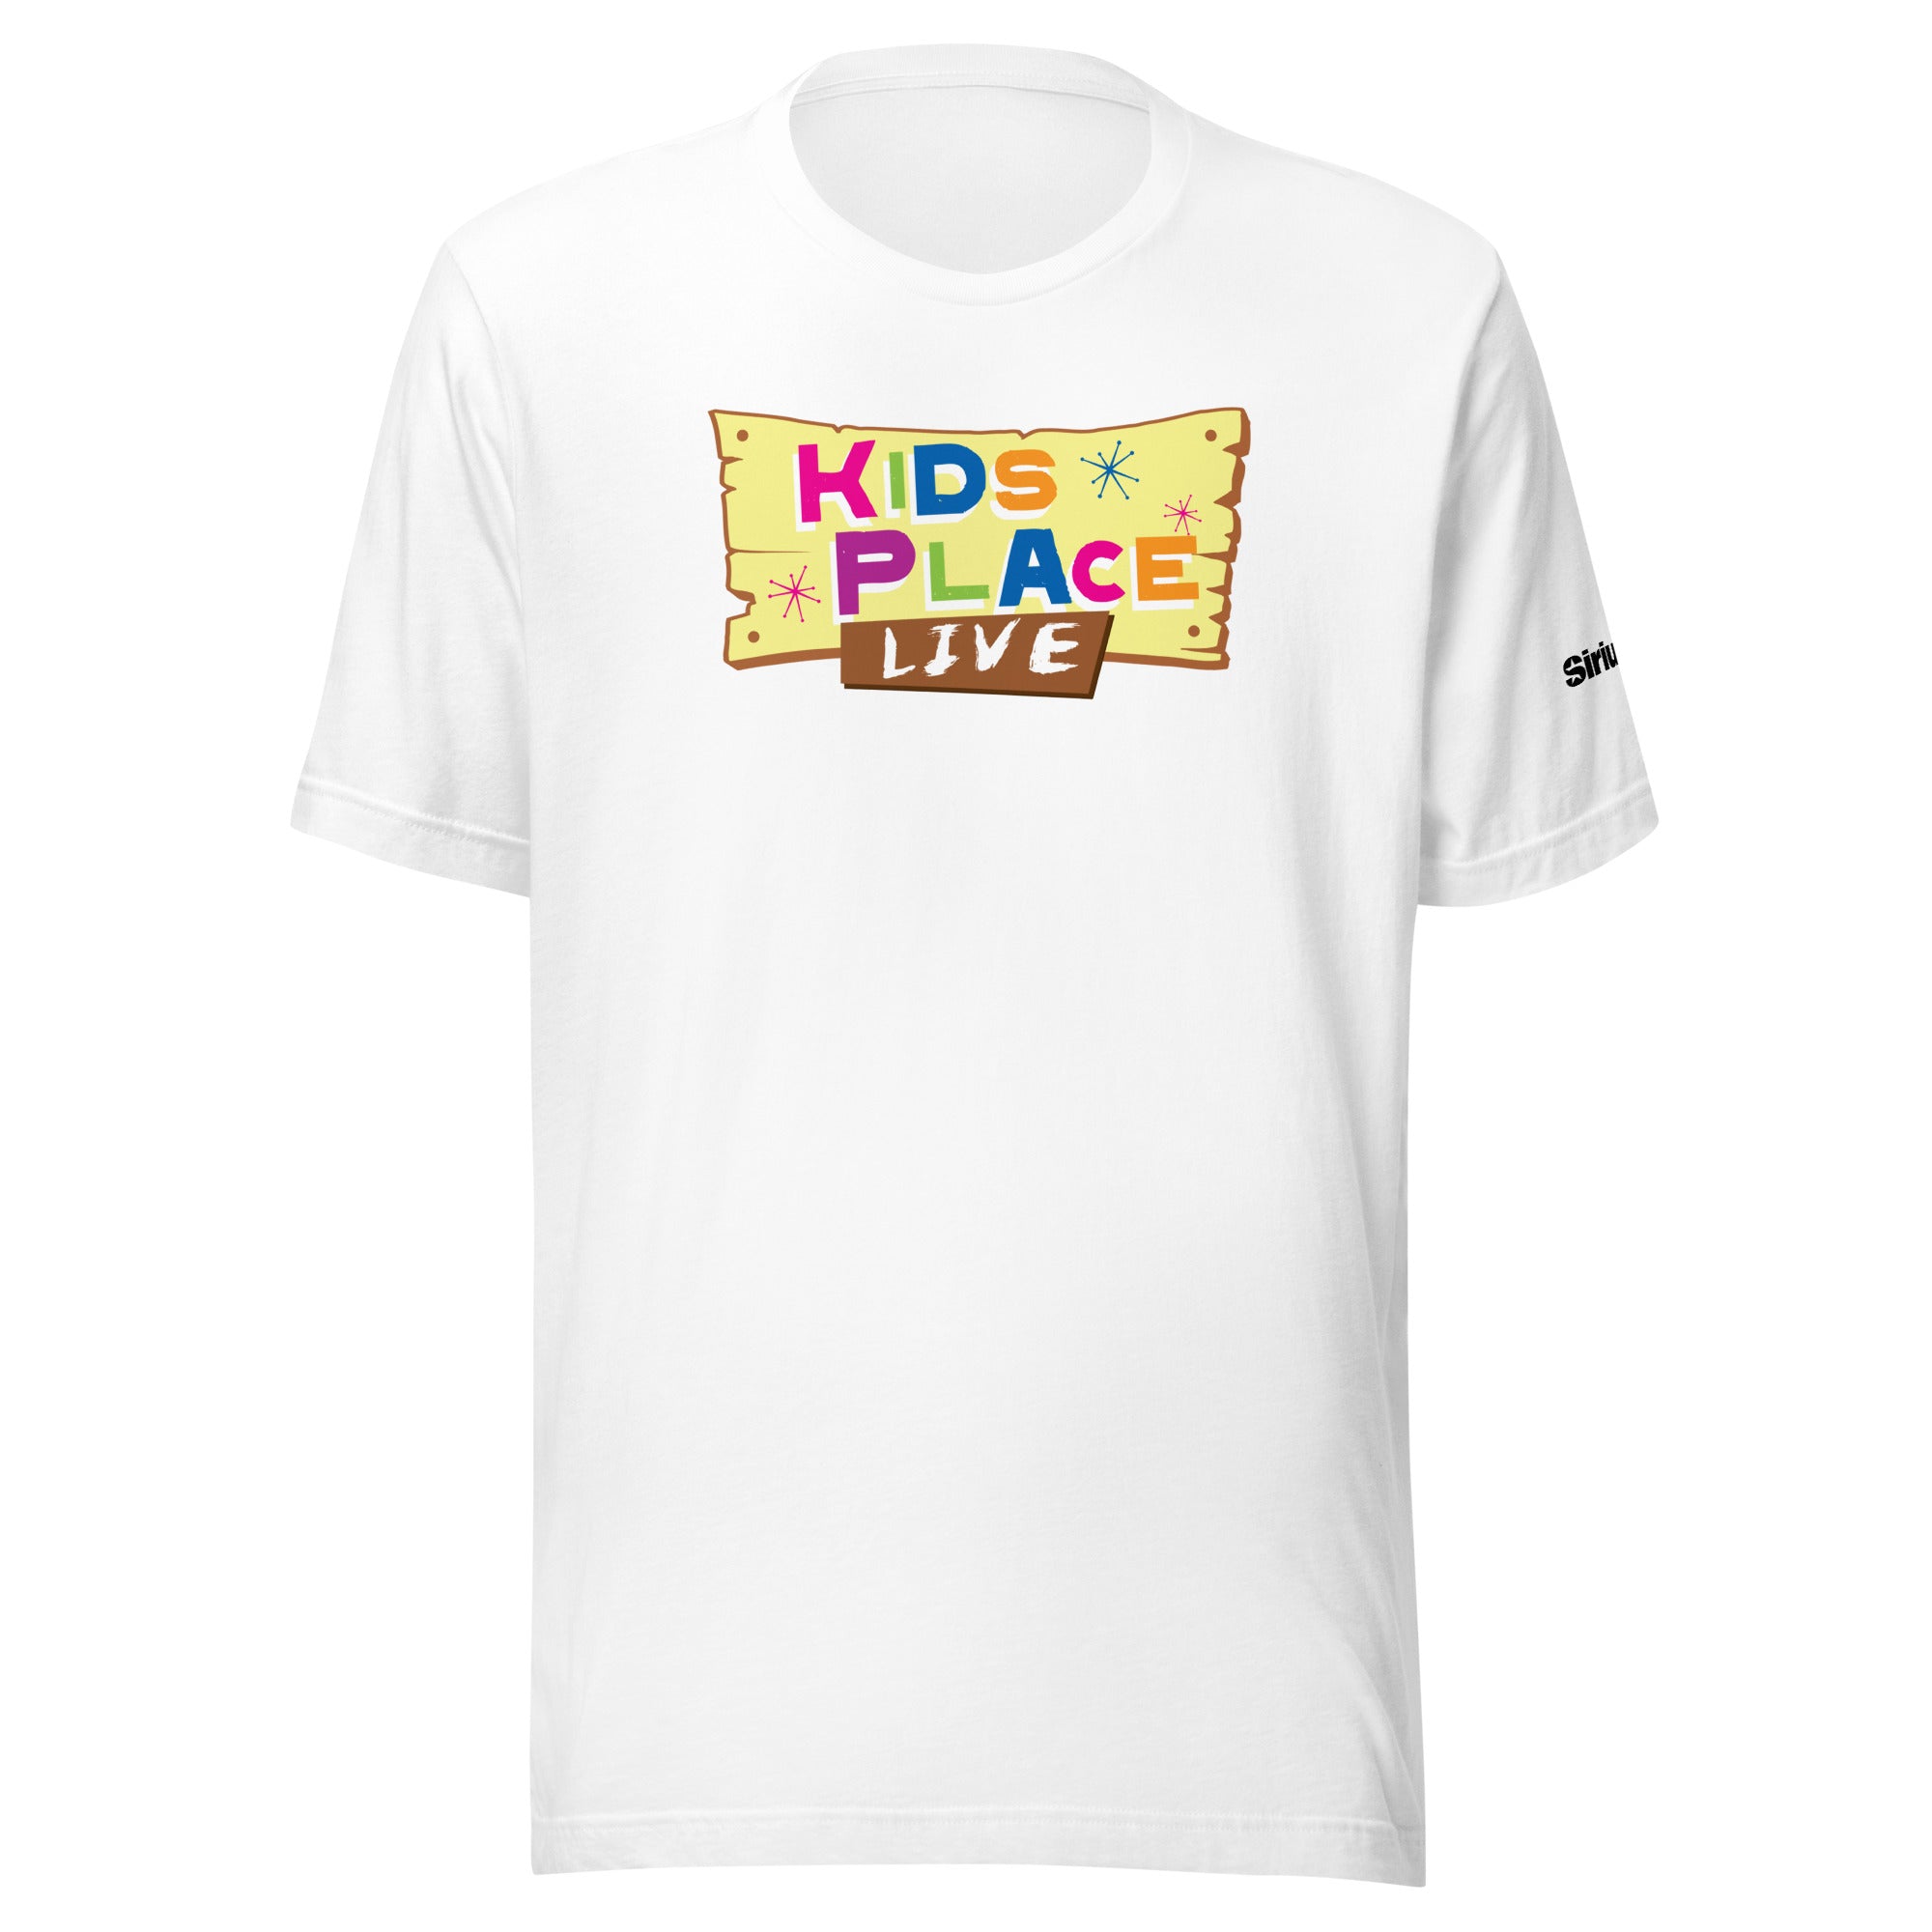 Kids Place Live: T-shirt (White)